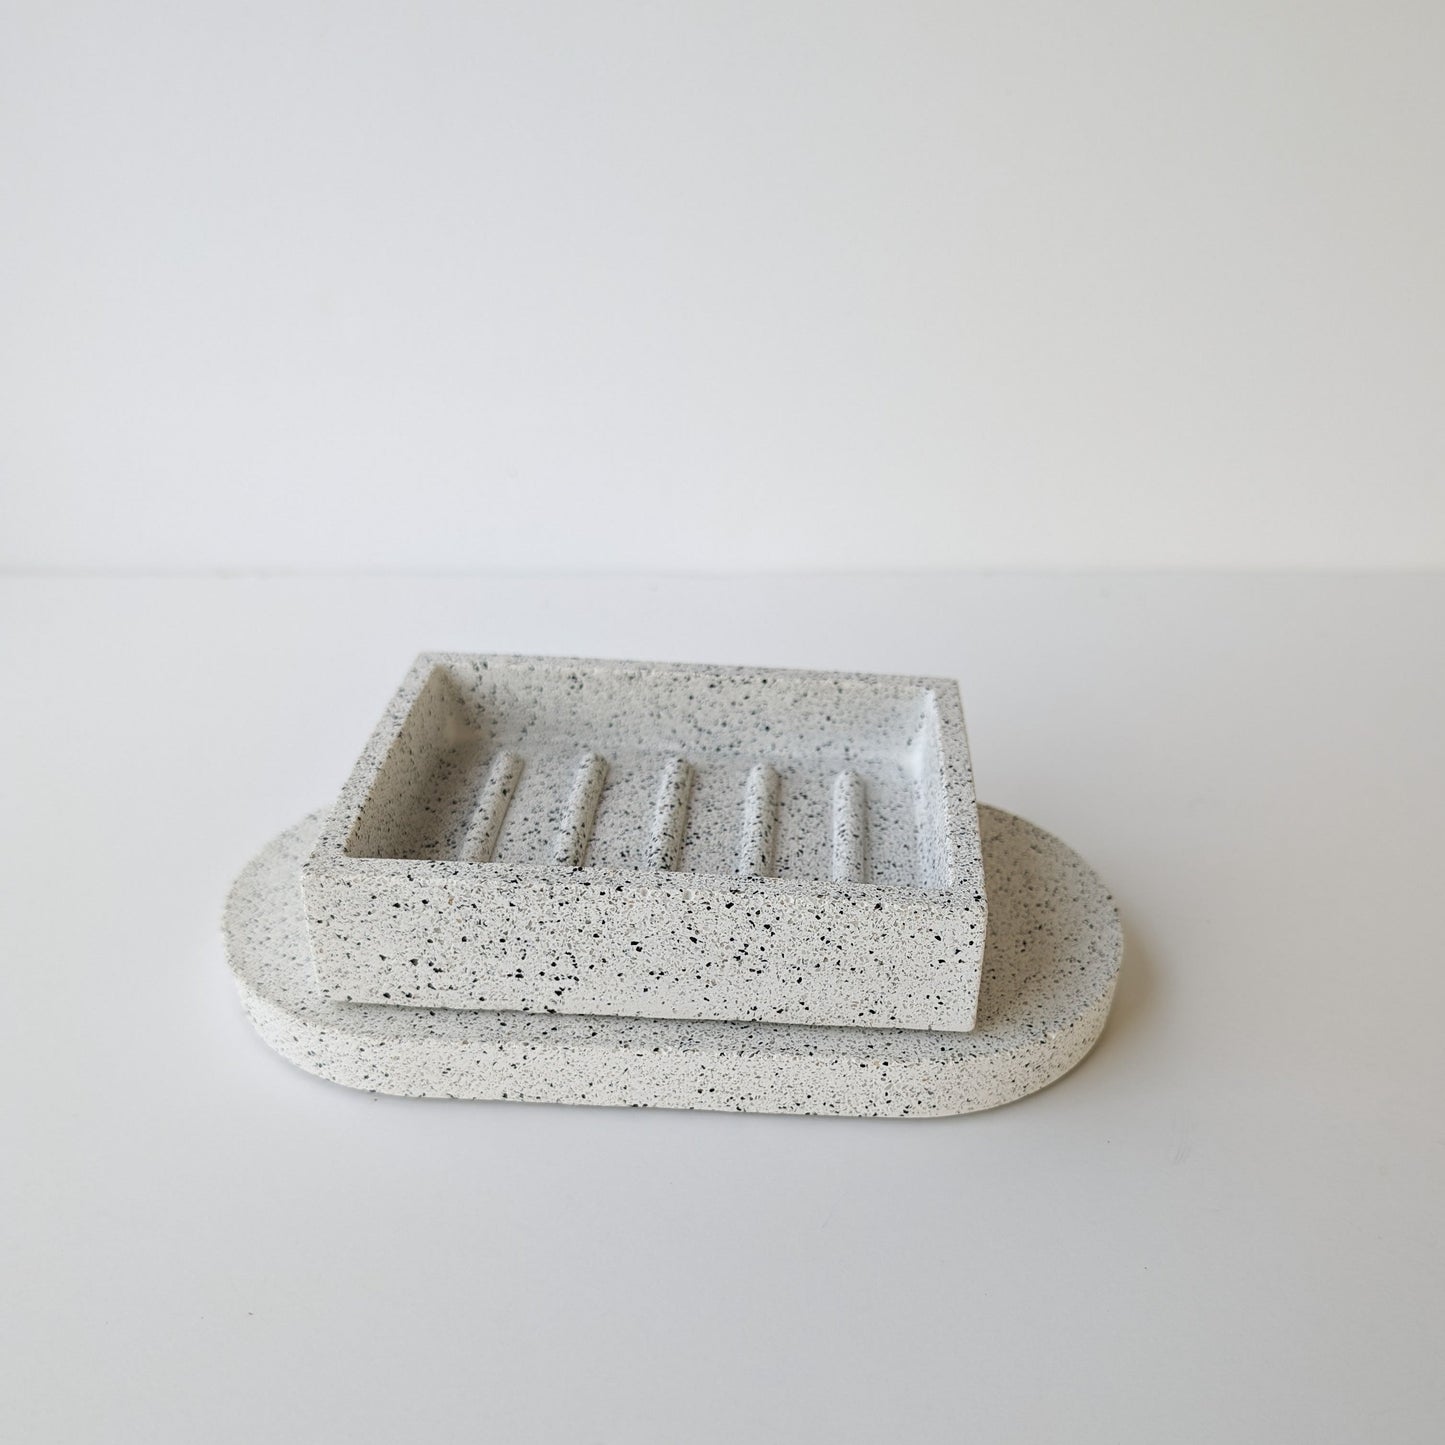 Concrete Self Draining Soap Dish